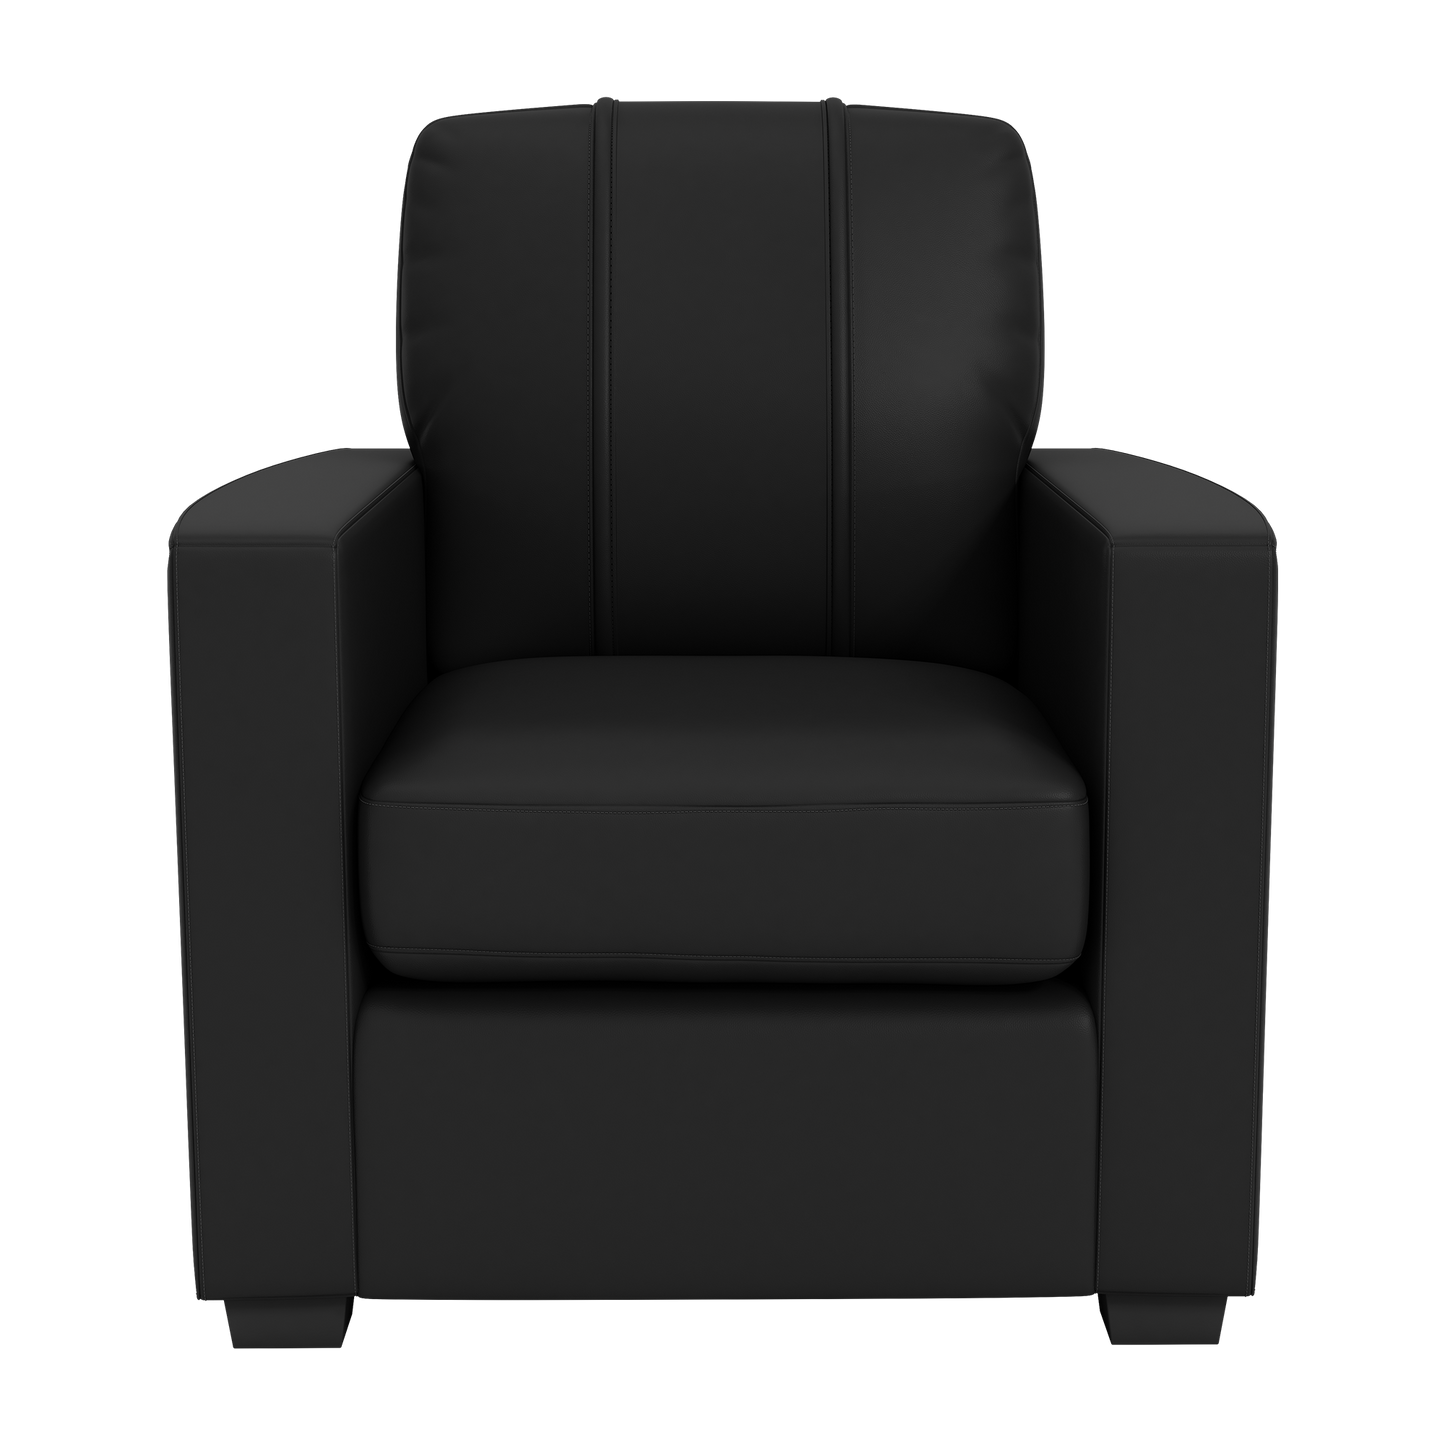 Stationary Club Chair with U Sports Gaming Logo